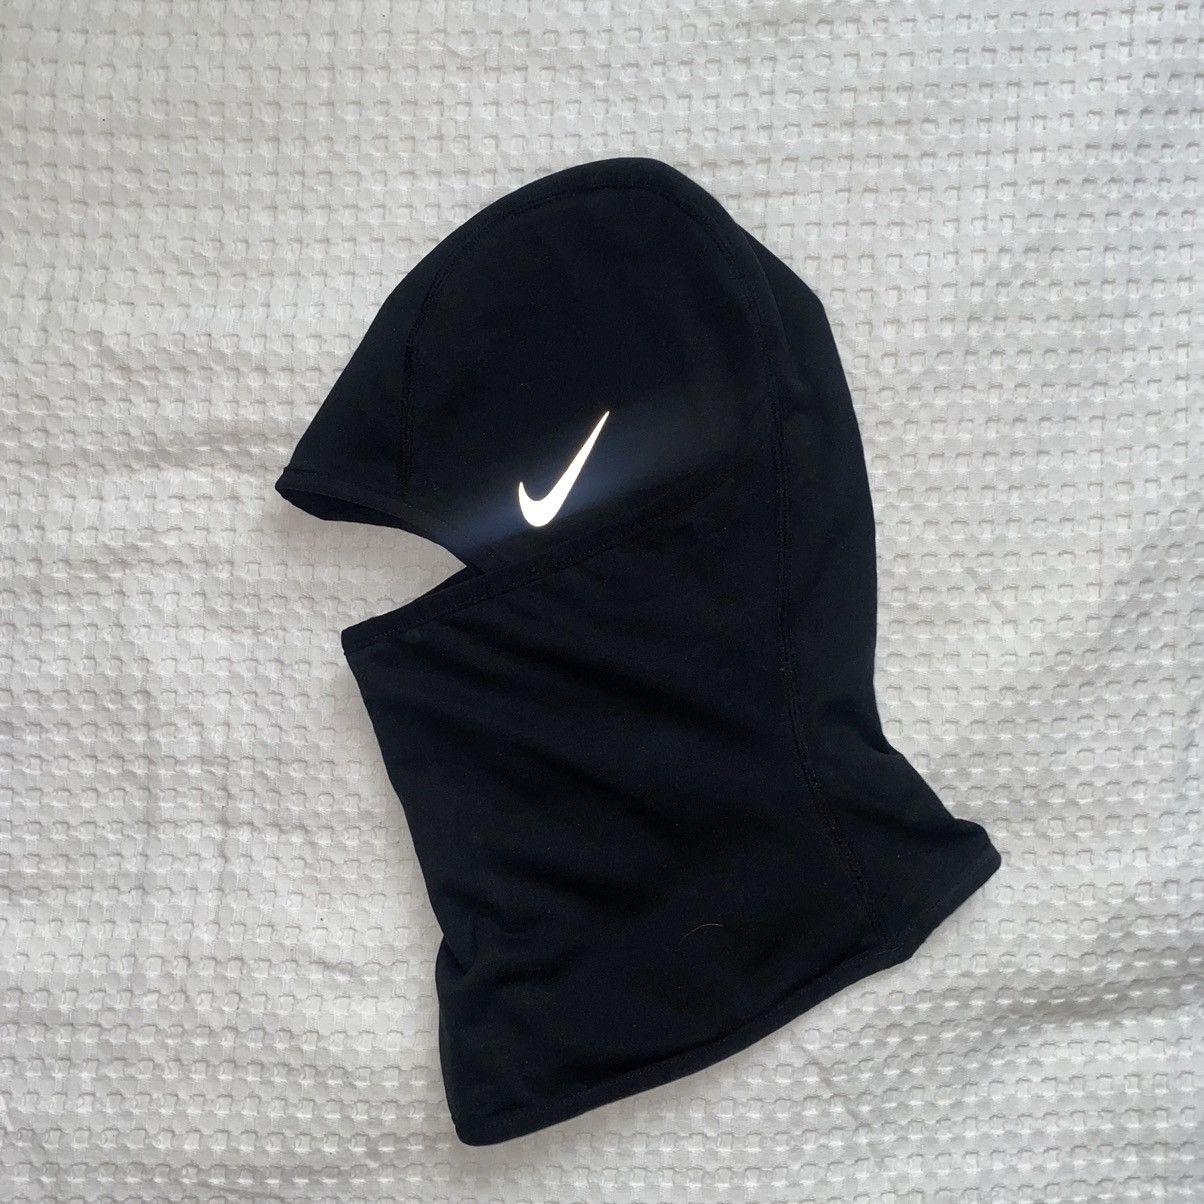 Nike Nike Ski Mask Size ONE SIZE - 2 Preview